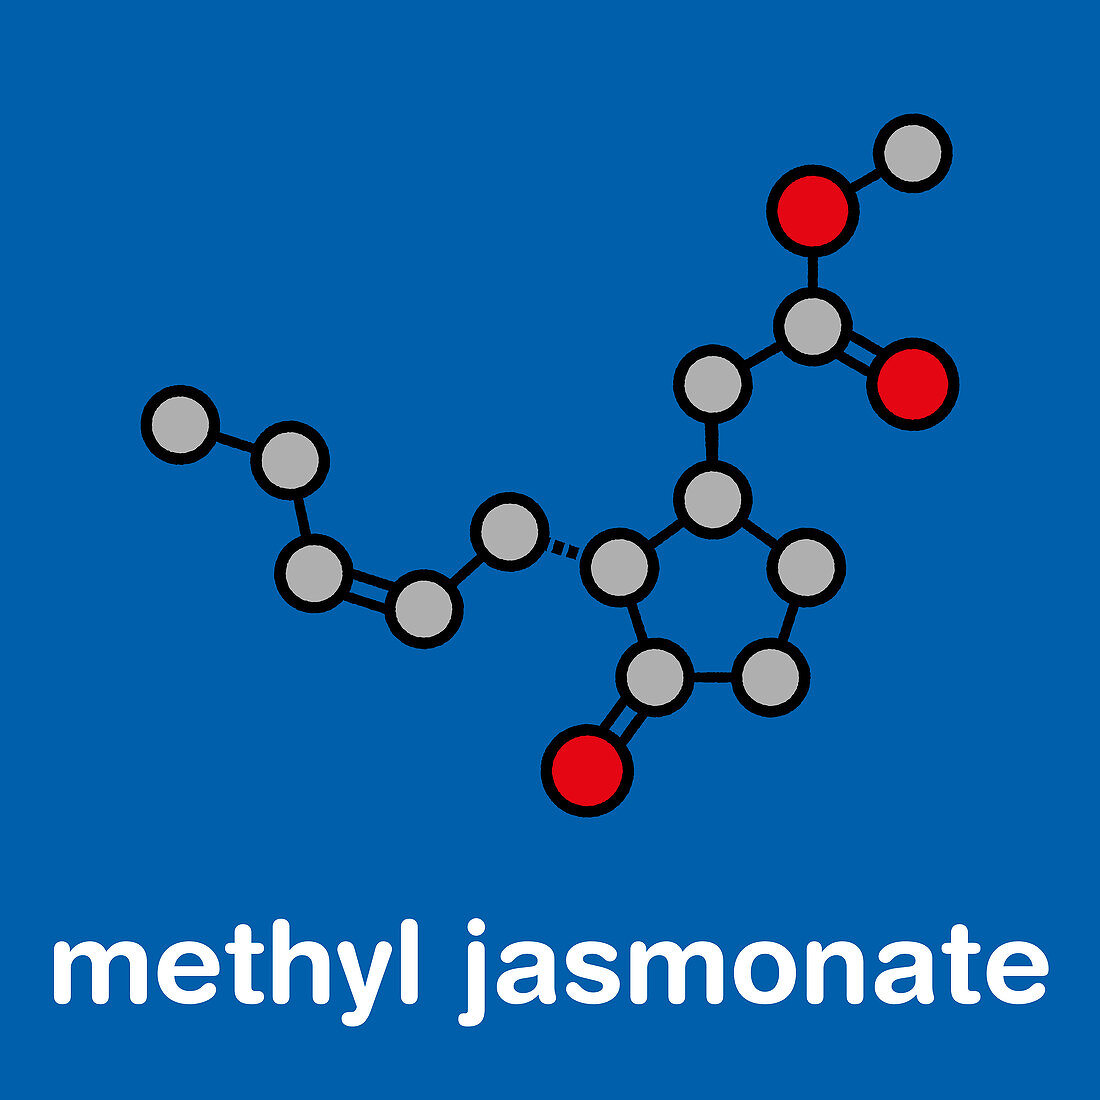 Methyl jasmonate plant stress signal molecule, illustration